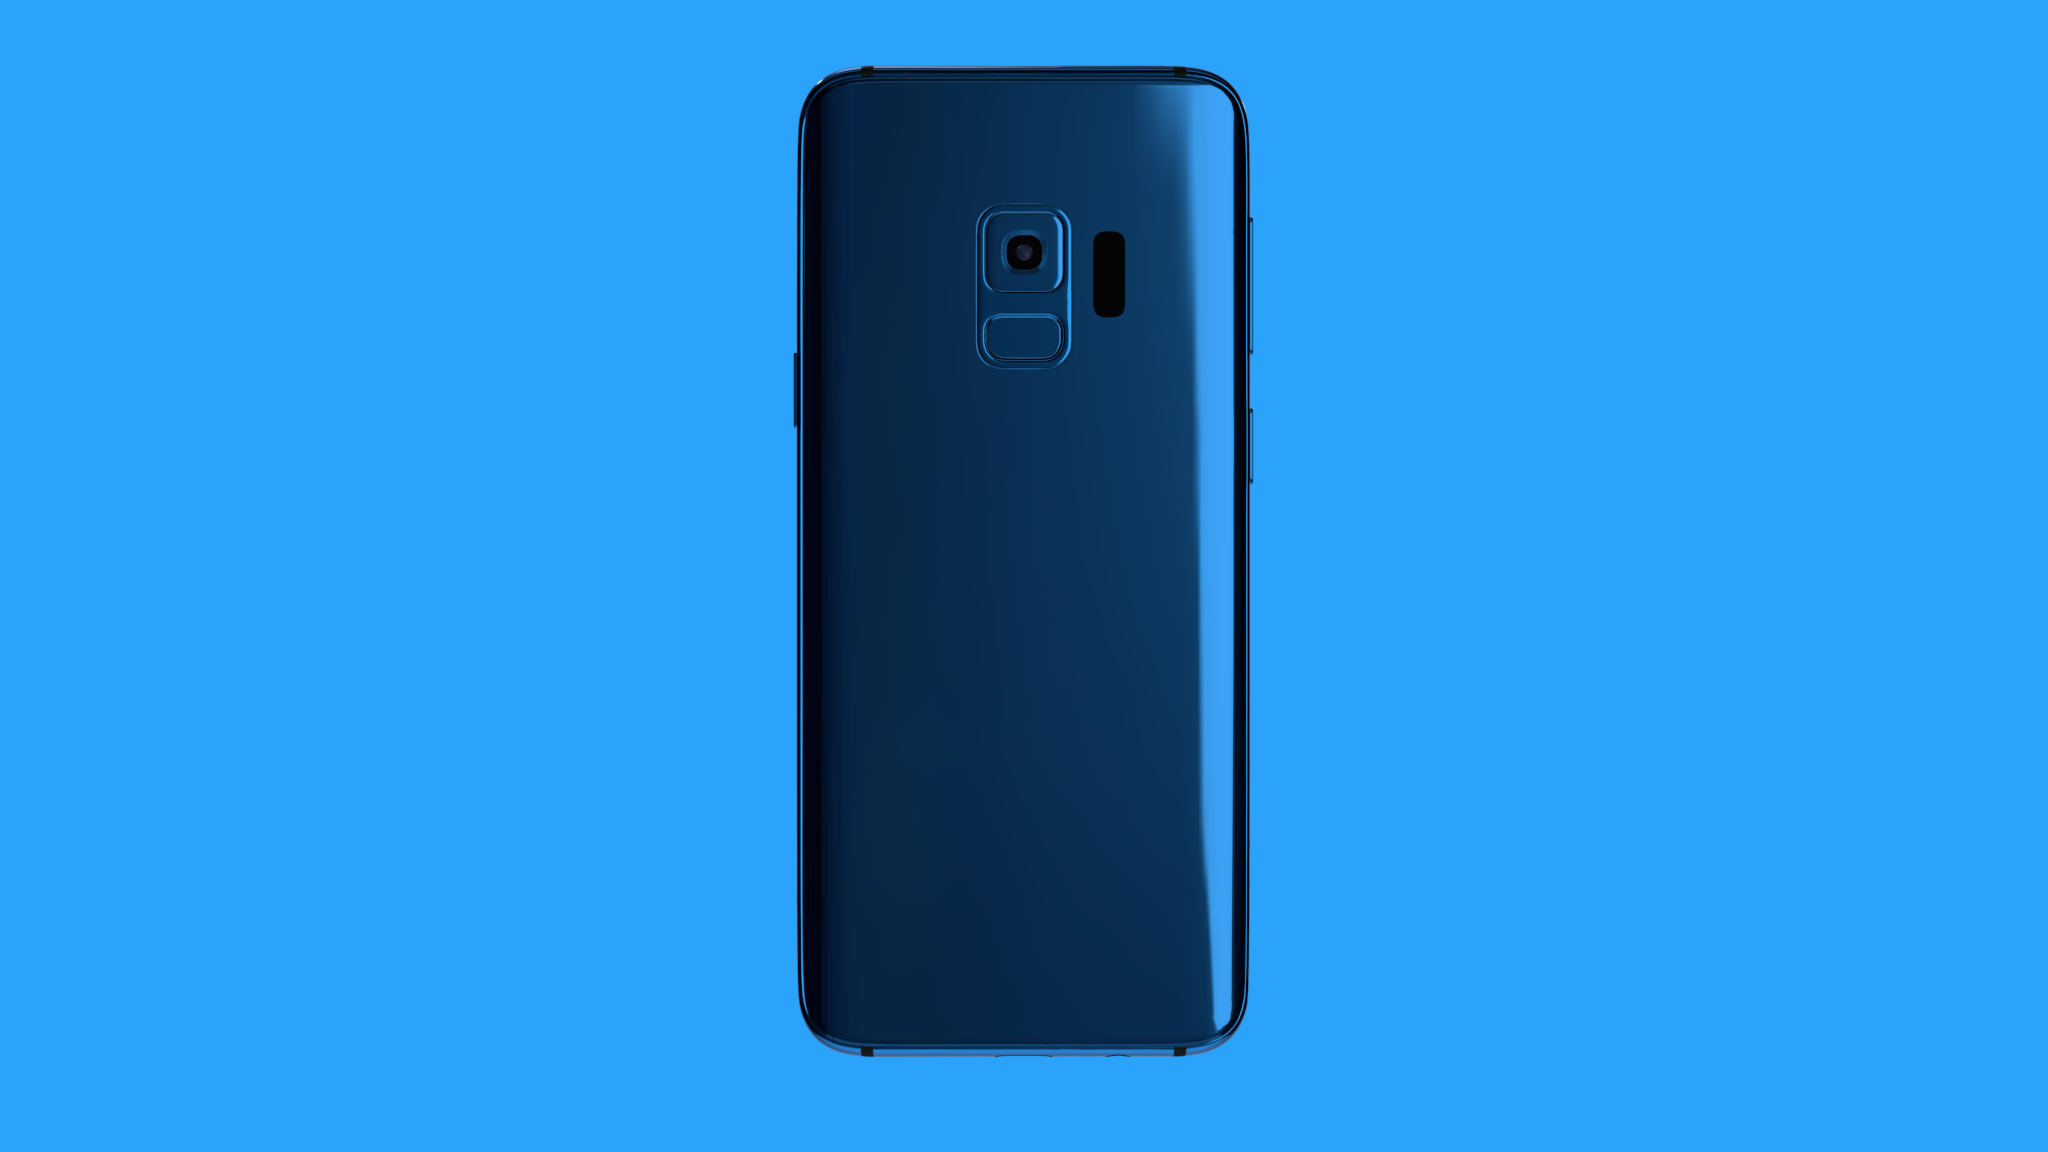 Blue S9 on blue background